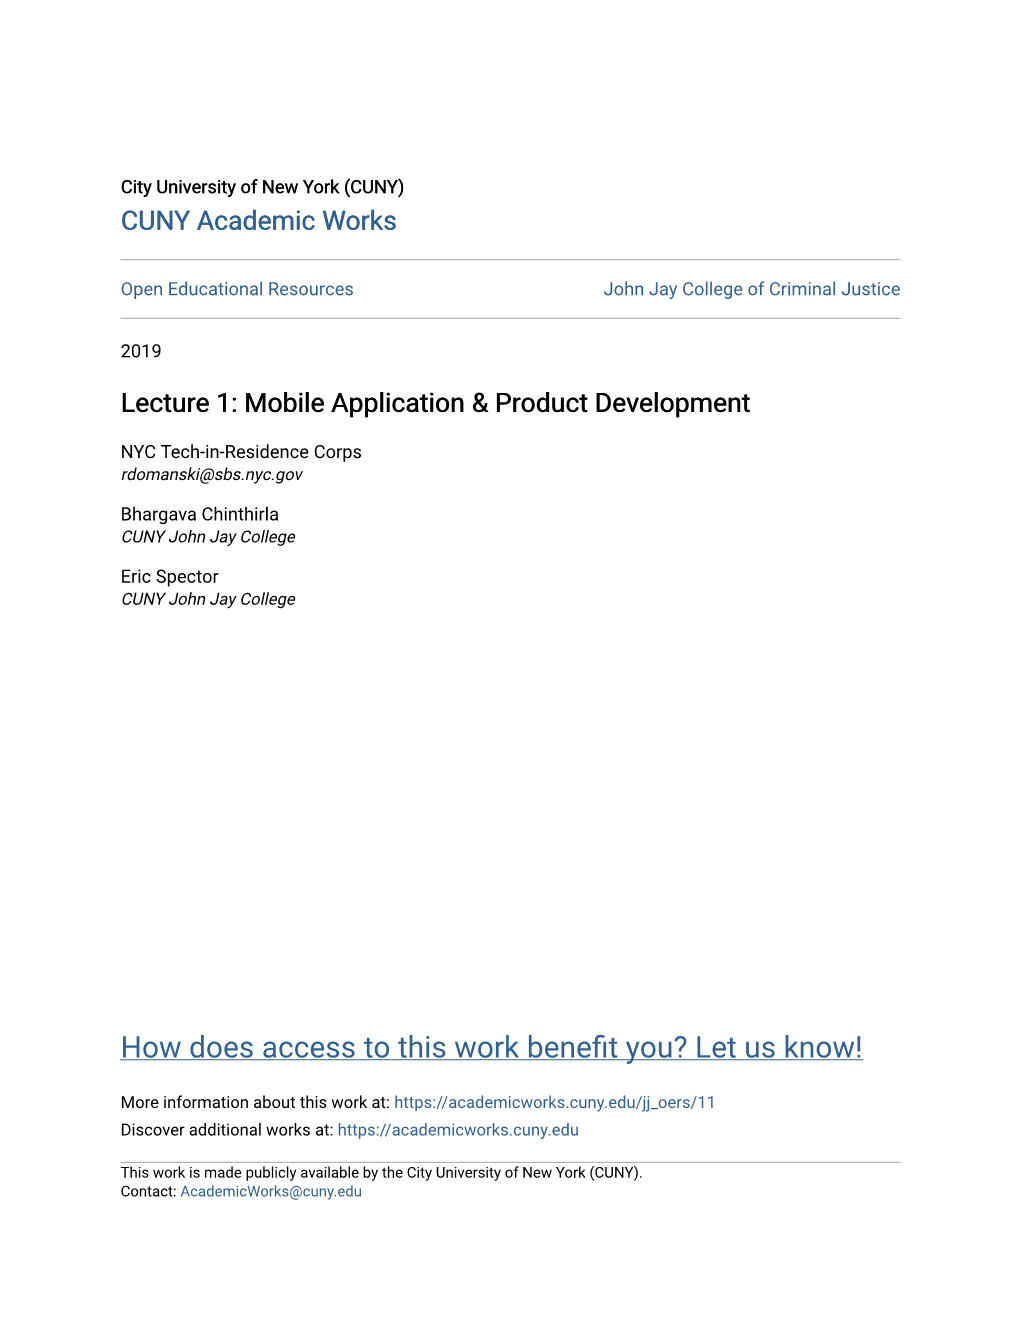 Mobile Application & Product Development